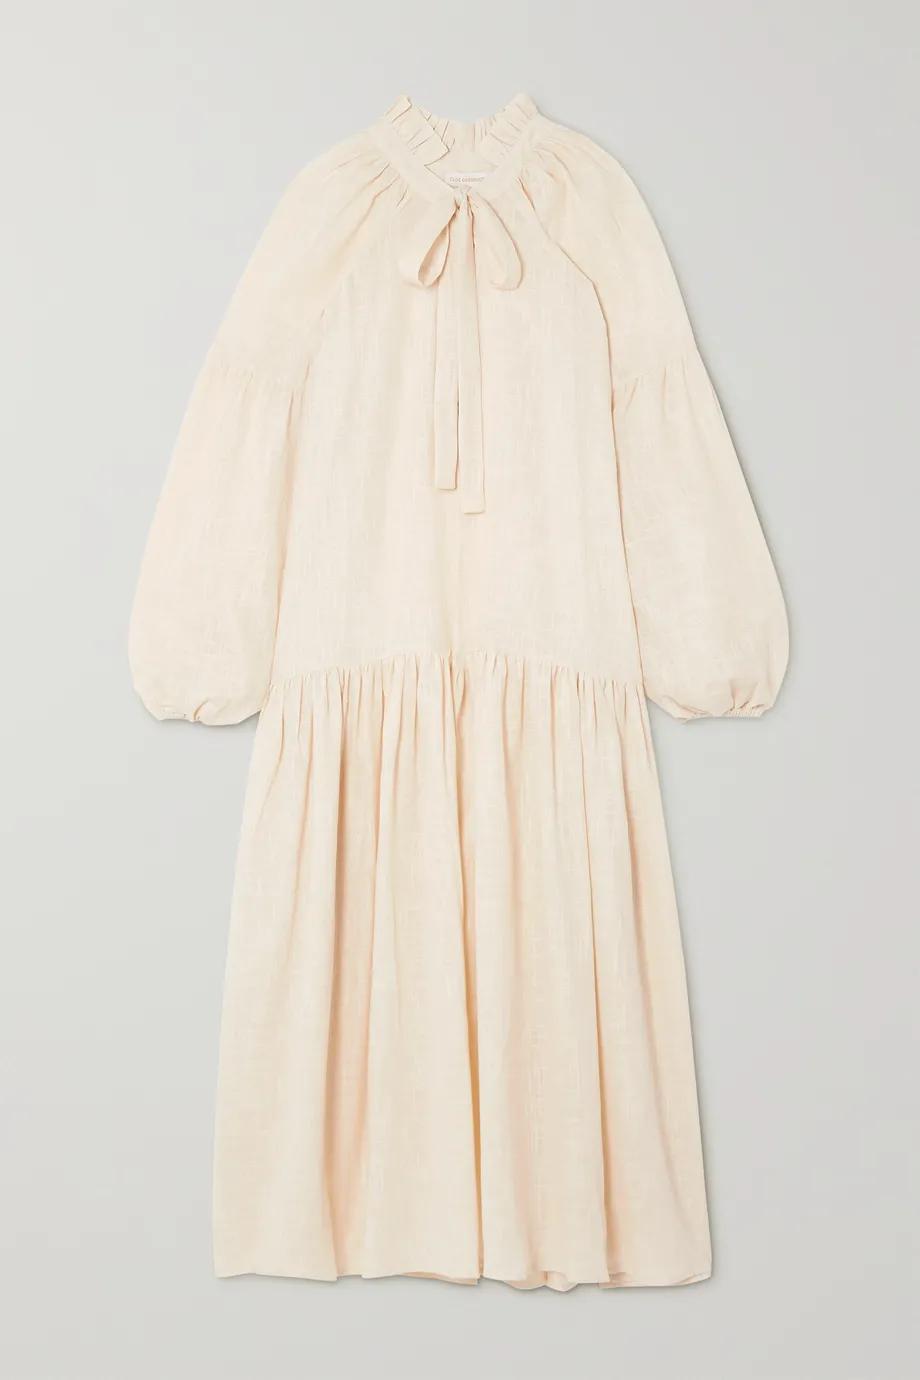 + NET SUSTAIN Donna organic cotton-gauze dress by CLOE CASSANDRO